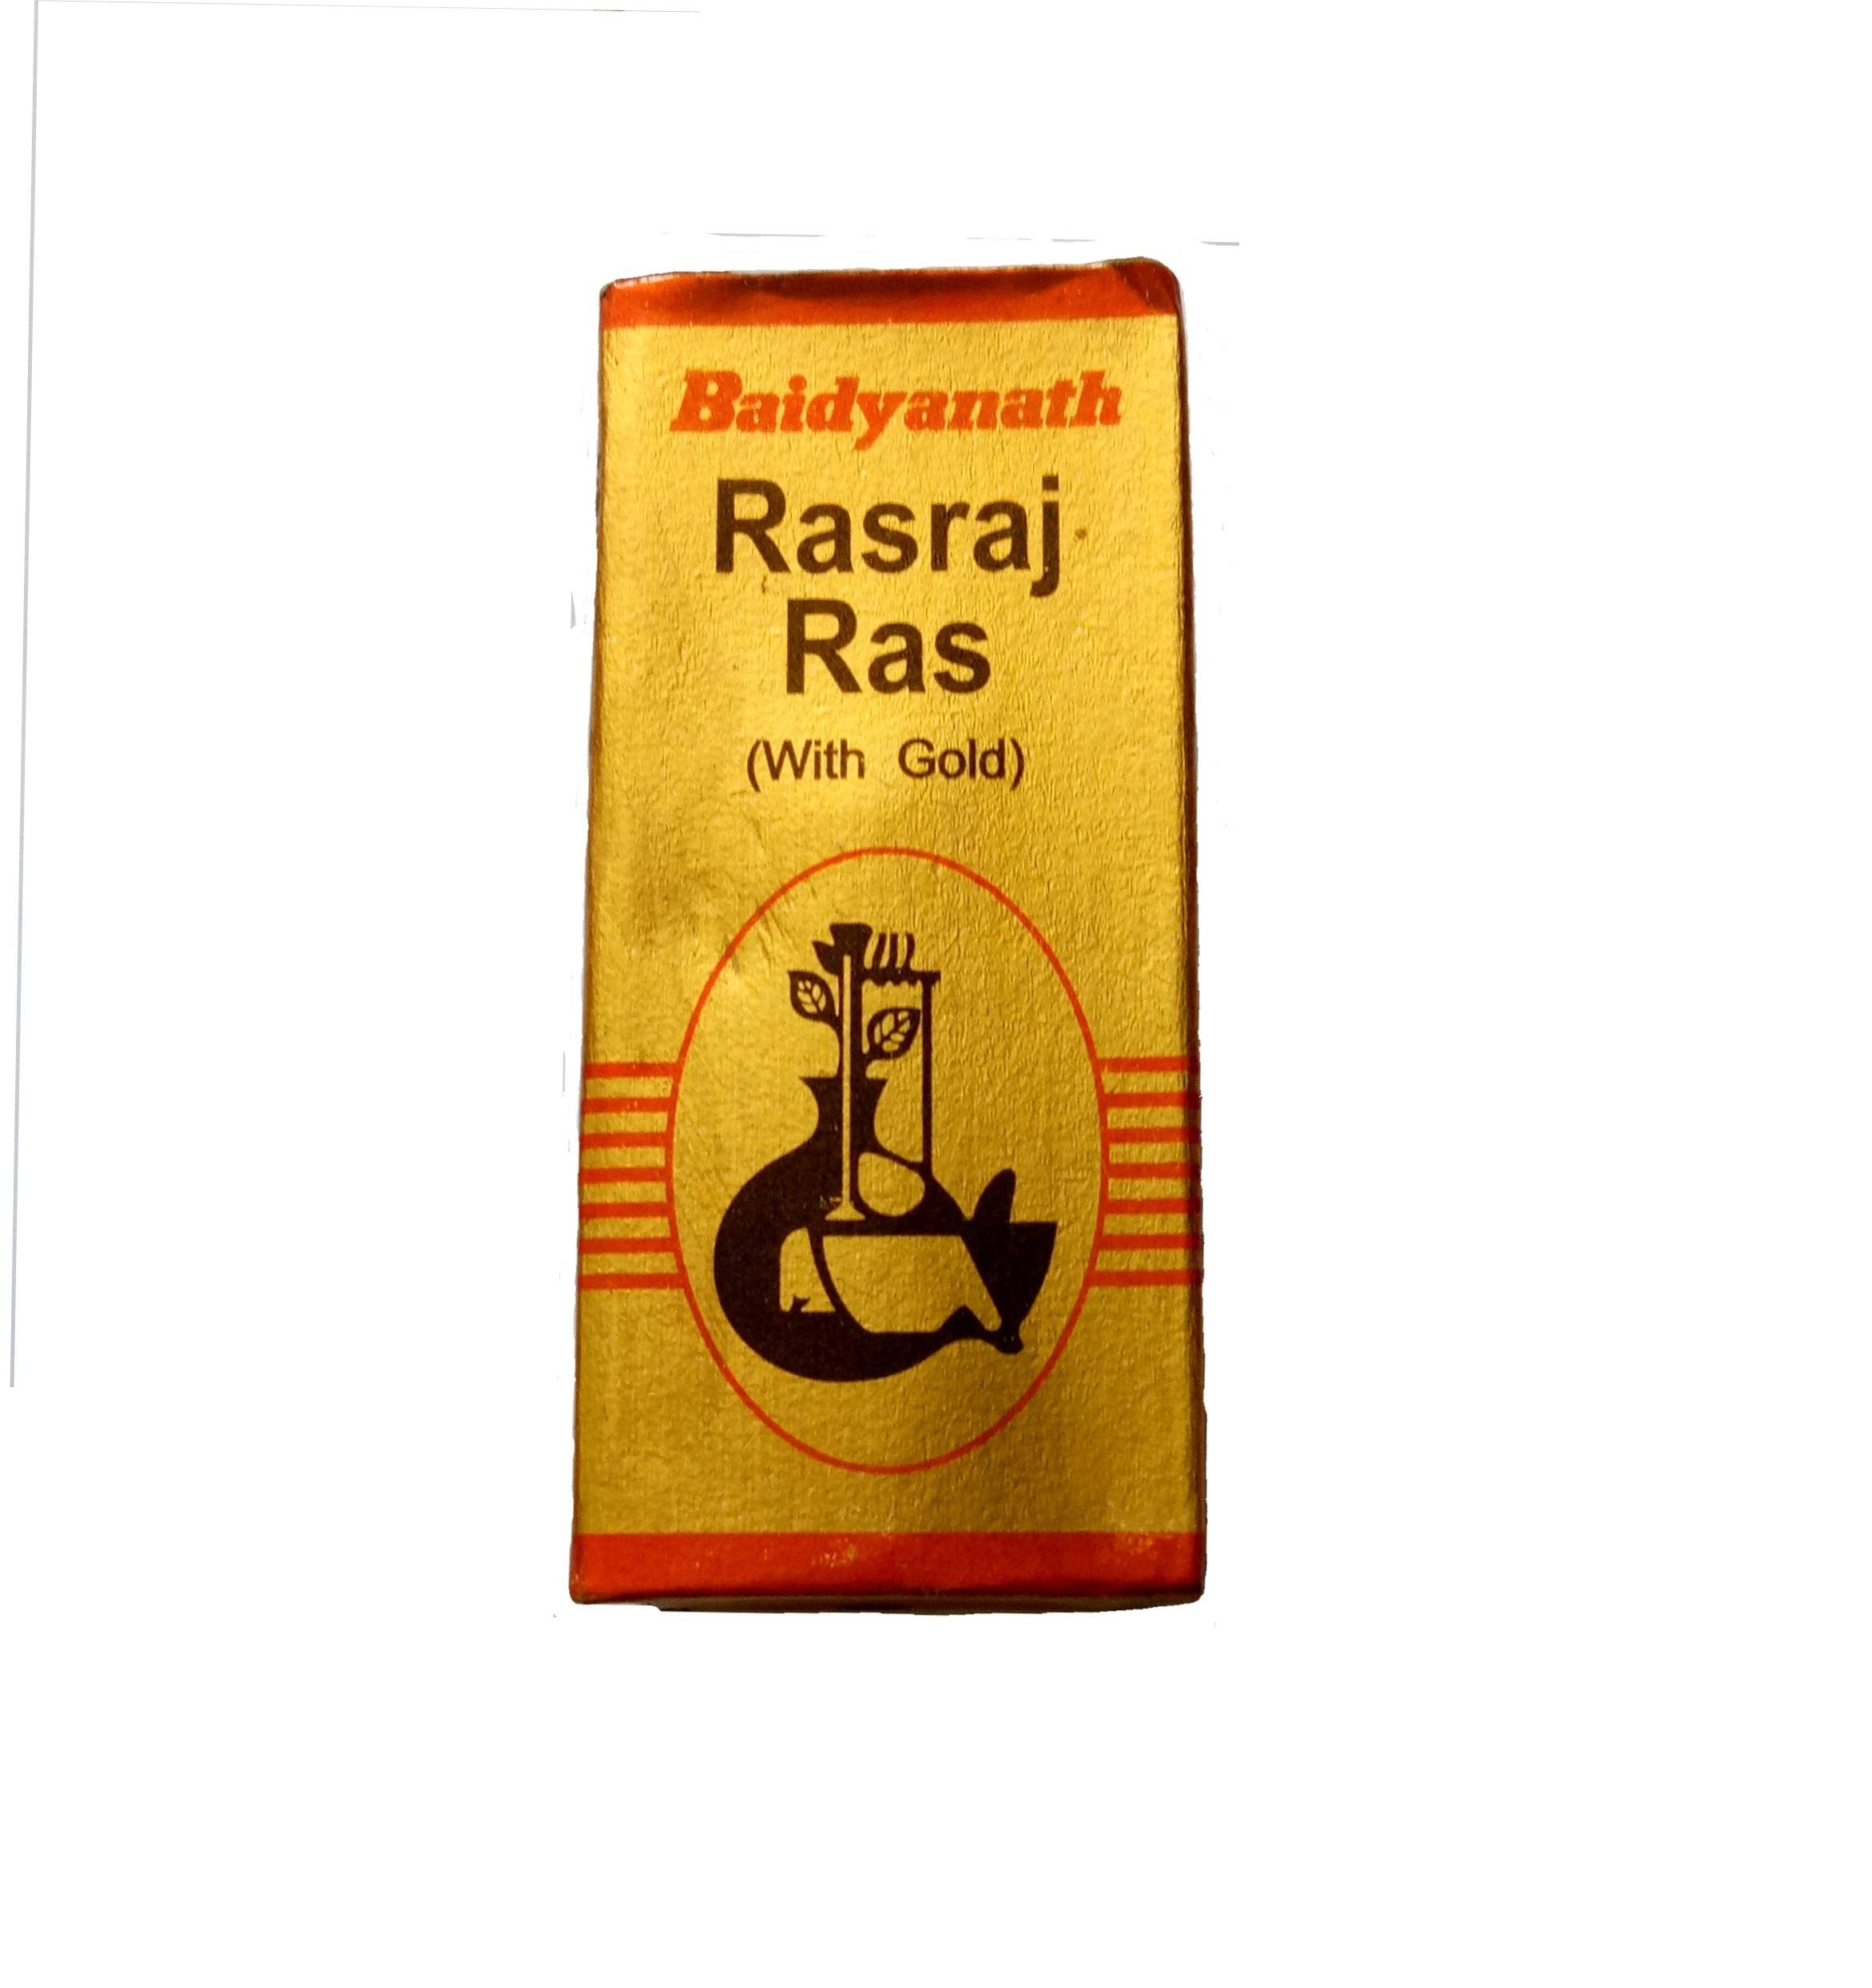 Baidyanath Rasraj Ras (with Gold)